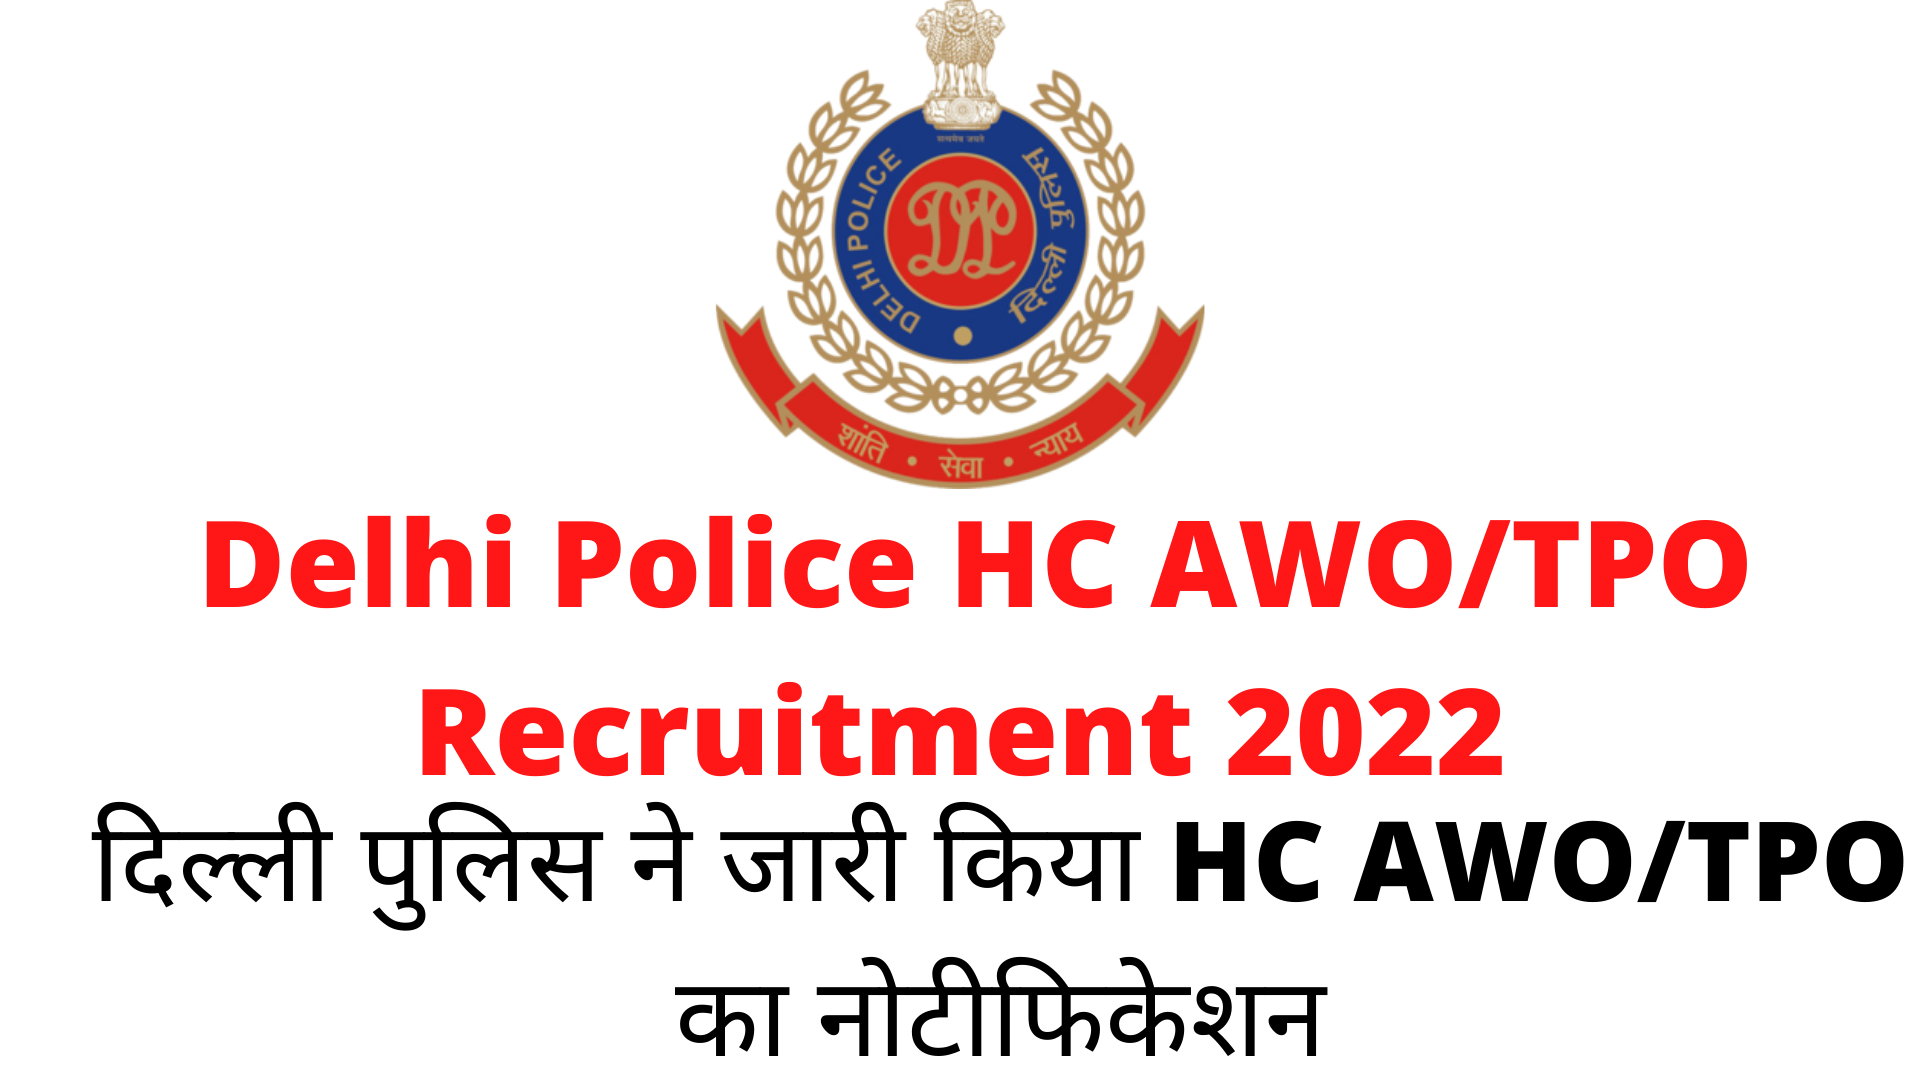 Delhi Police HC AWO/TPO Recruitment 2022 : दिल्ली पुलिस ने जारी किया HC AWO/TPO का नोटीफिकेशन